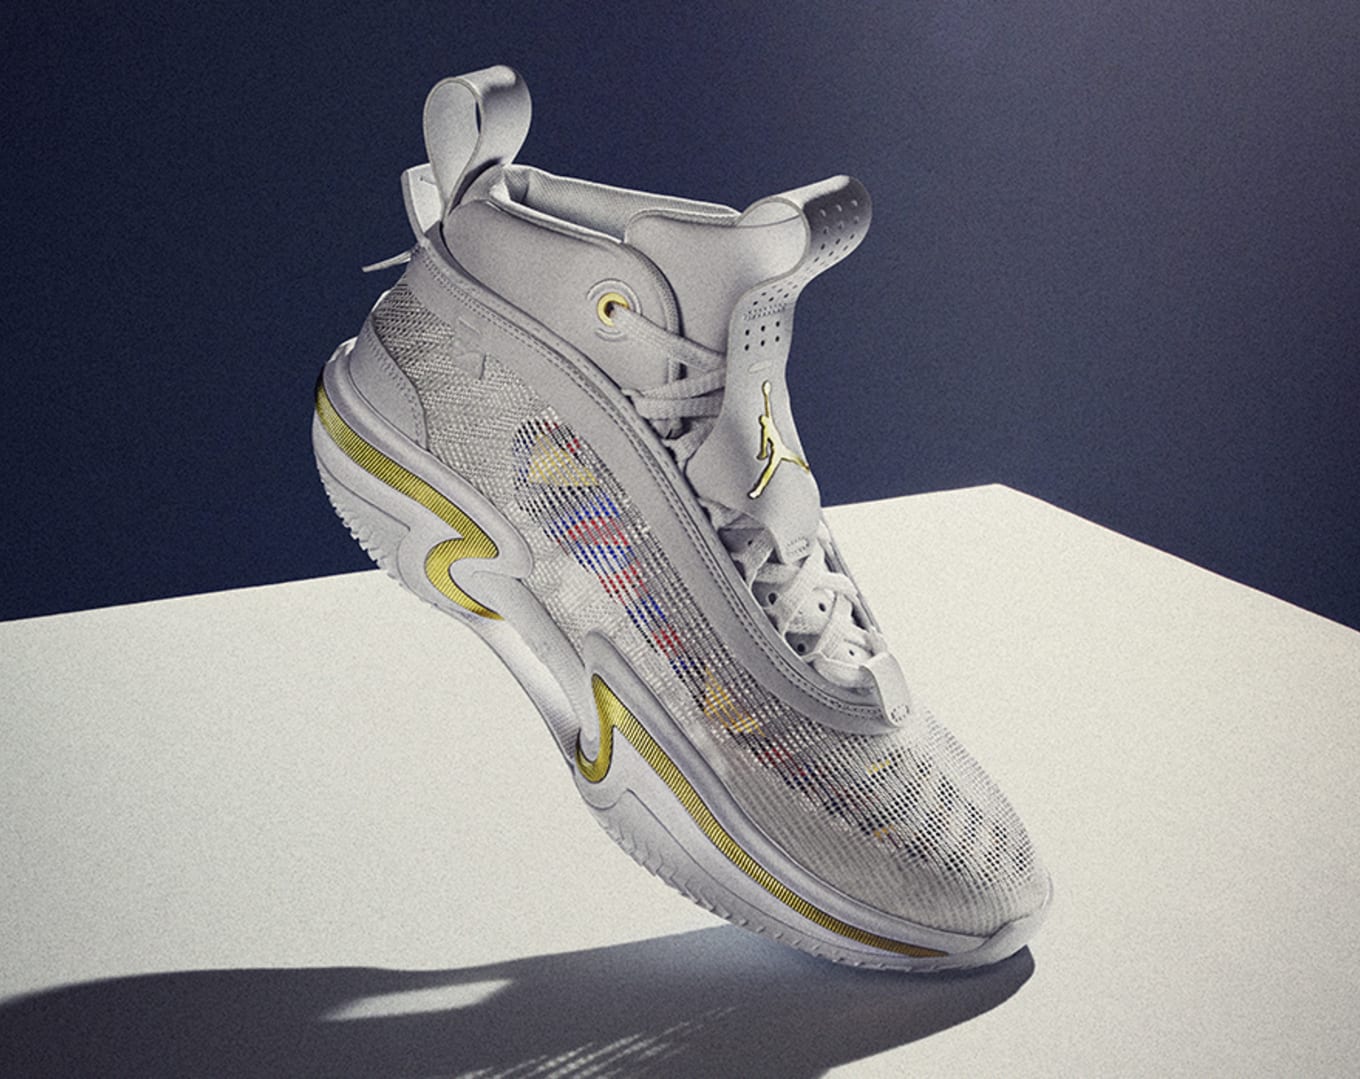 Air Jordan 36 Xxxvi Sneaker Release Date August 21 Sole Collector